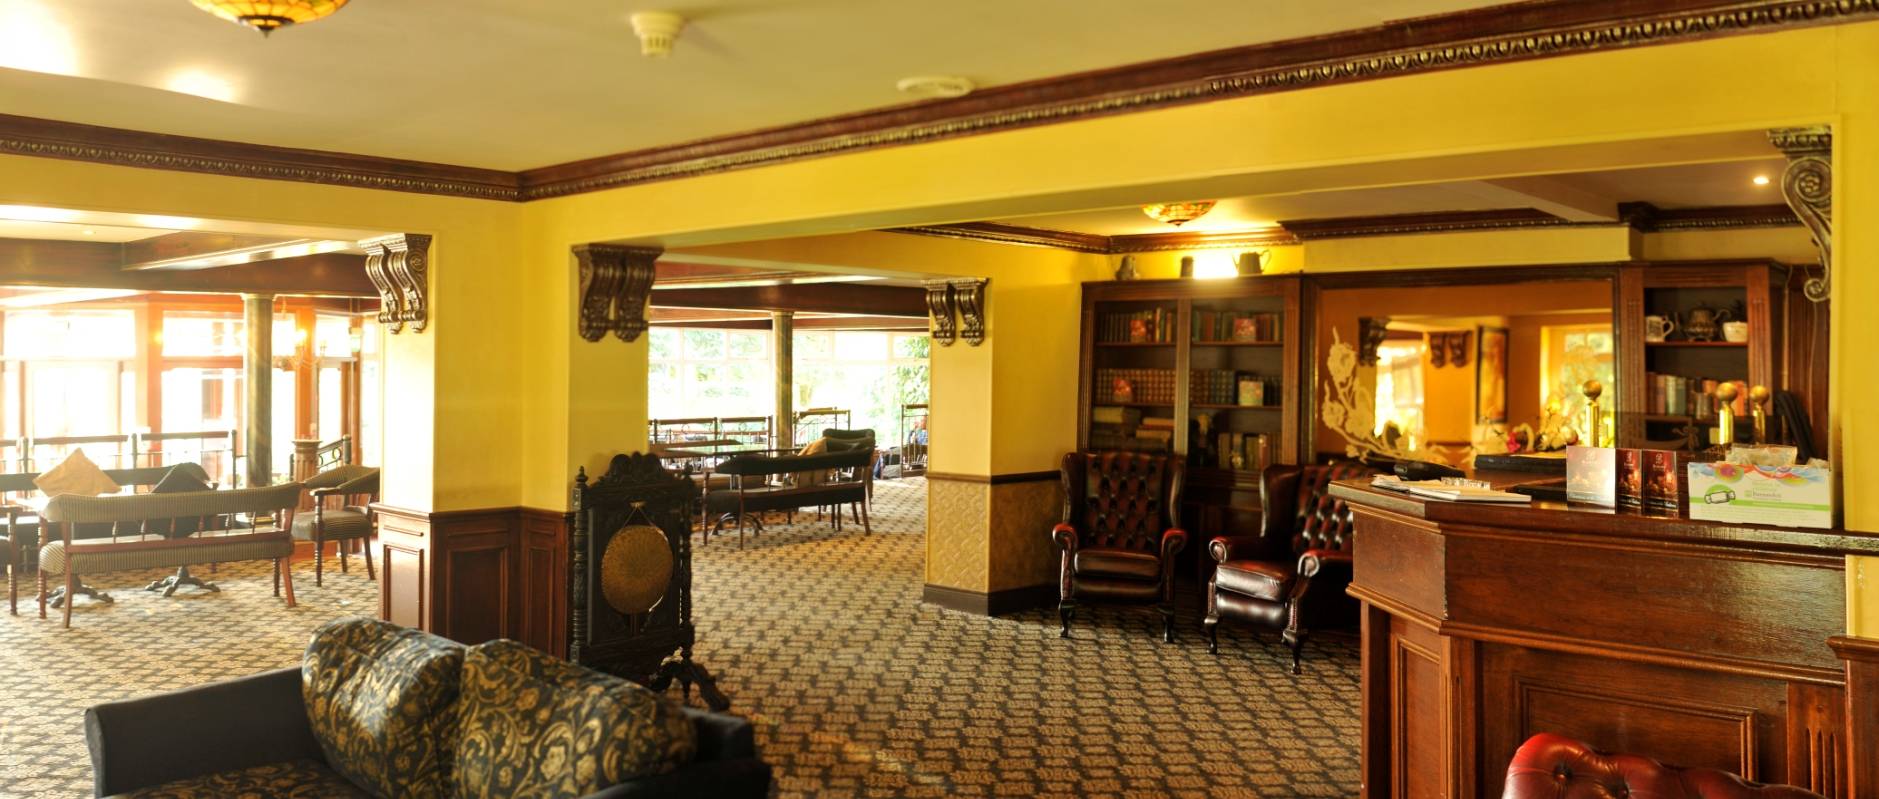 Foyer Bushtown Hotel Coleraine